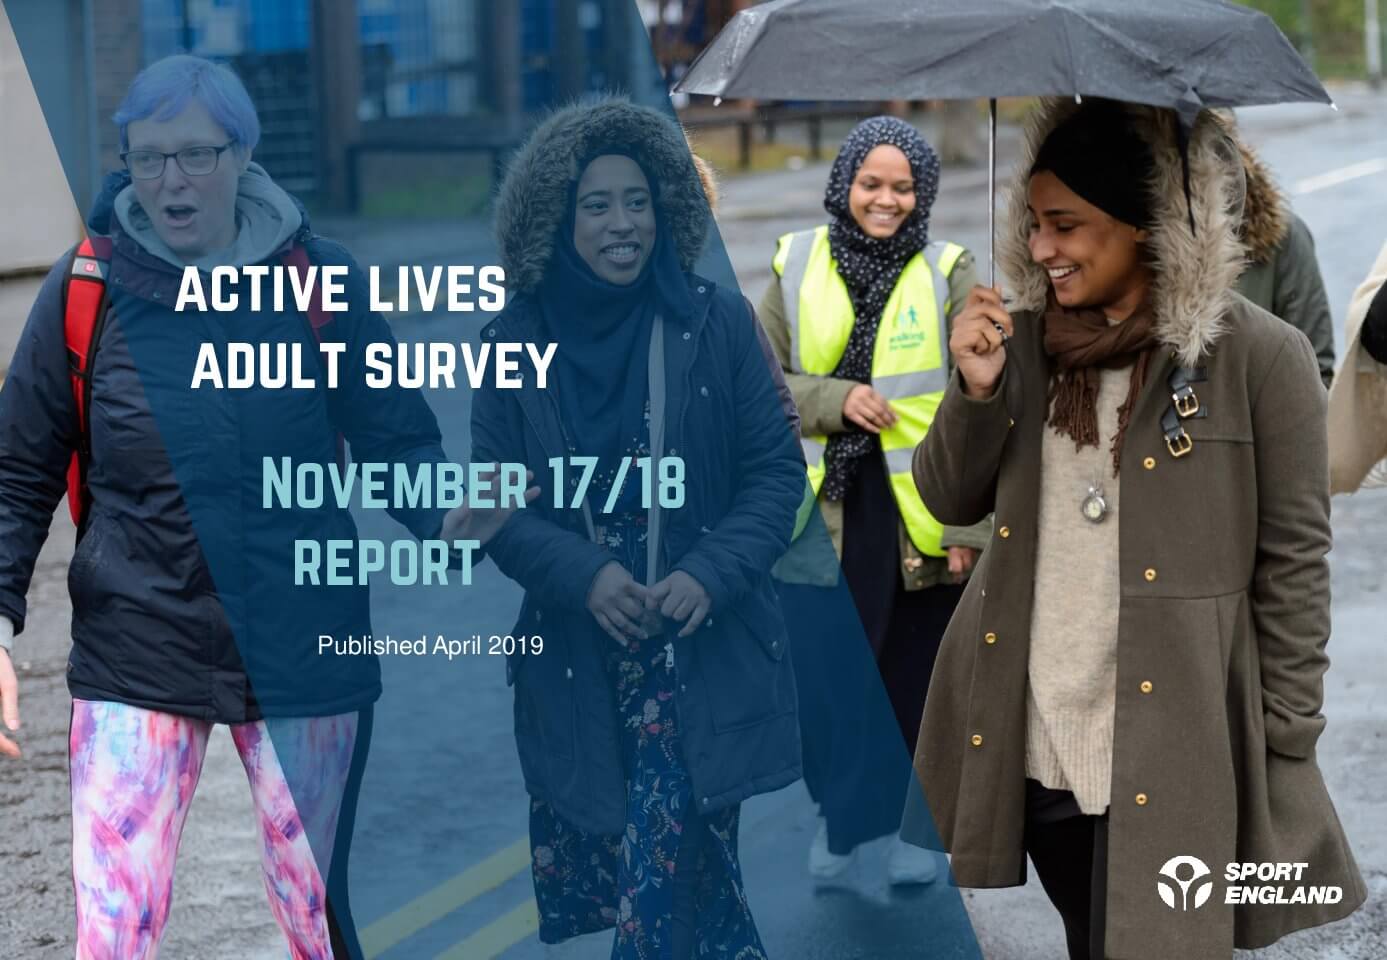 Active Lives Adult Survey November 17/18 report